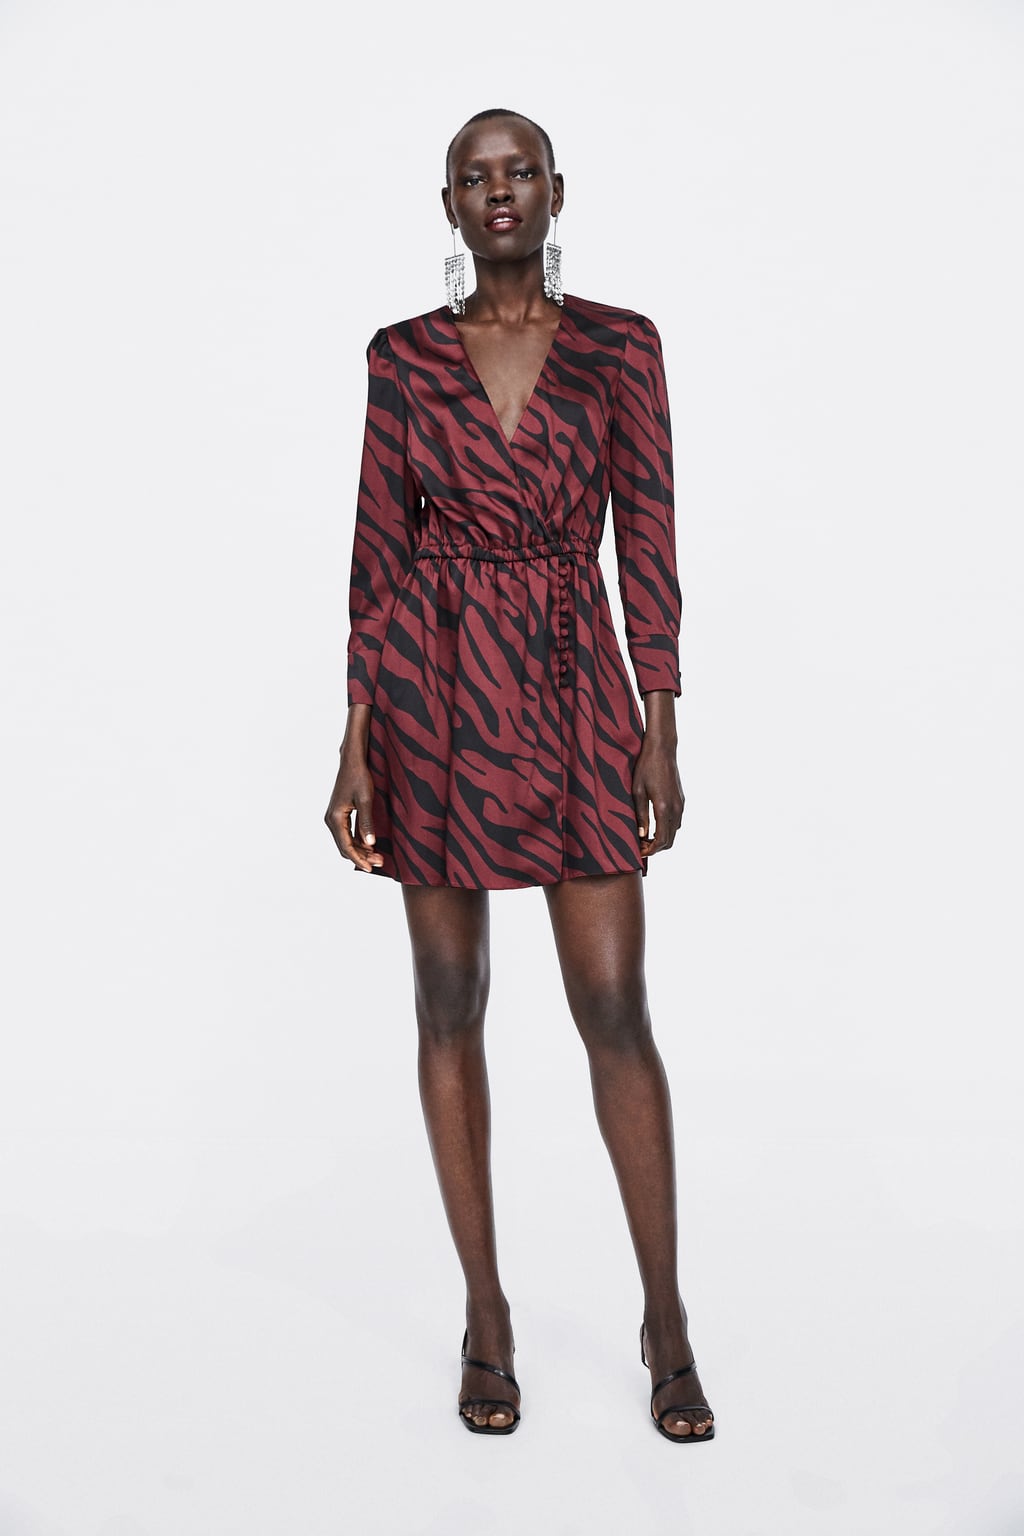 A Printed Dress: Zara Printed Wrap Dress